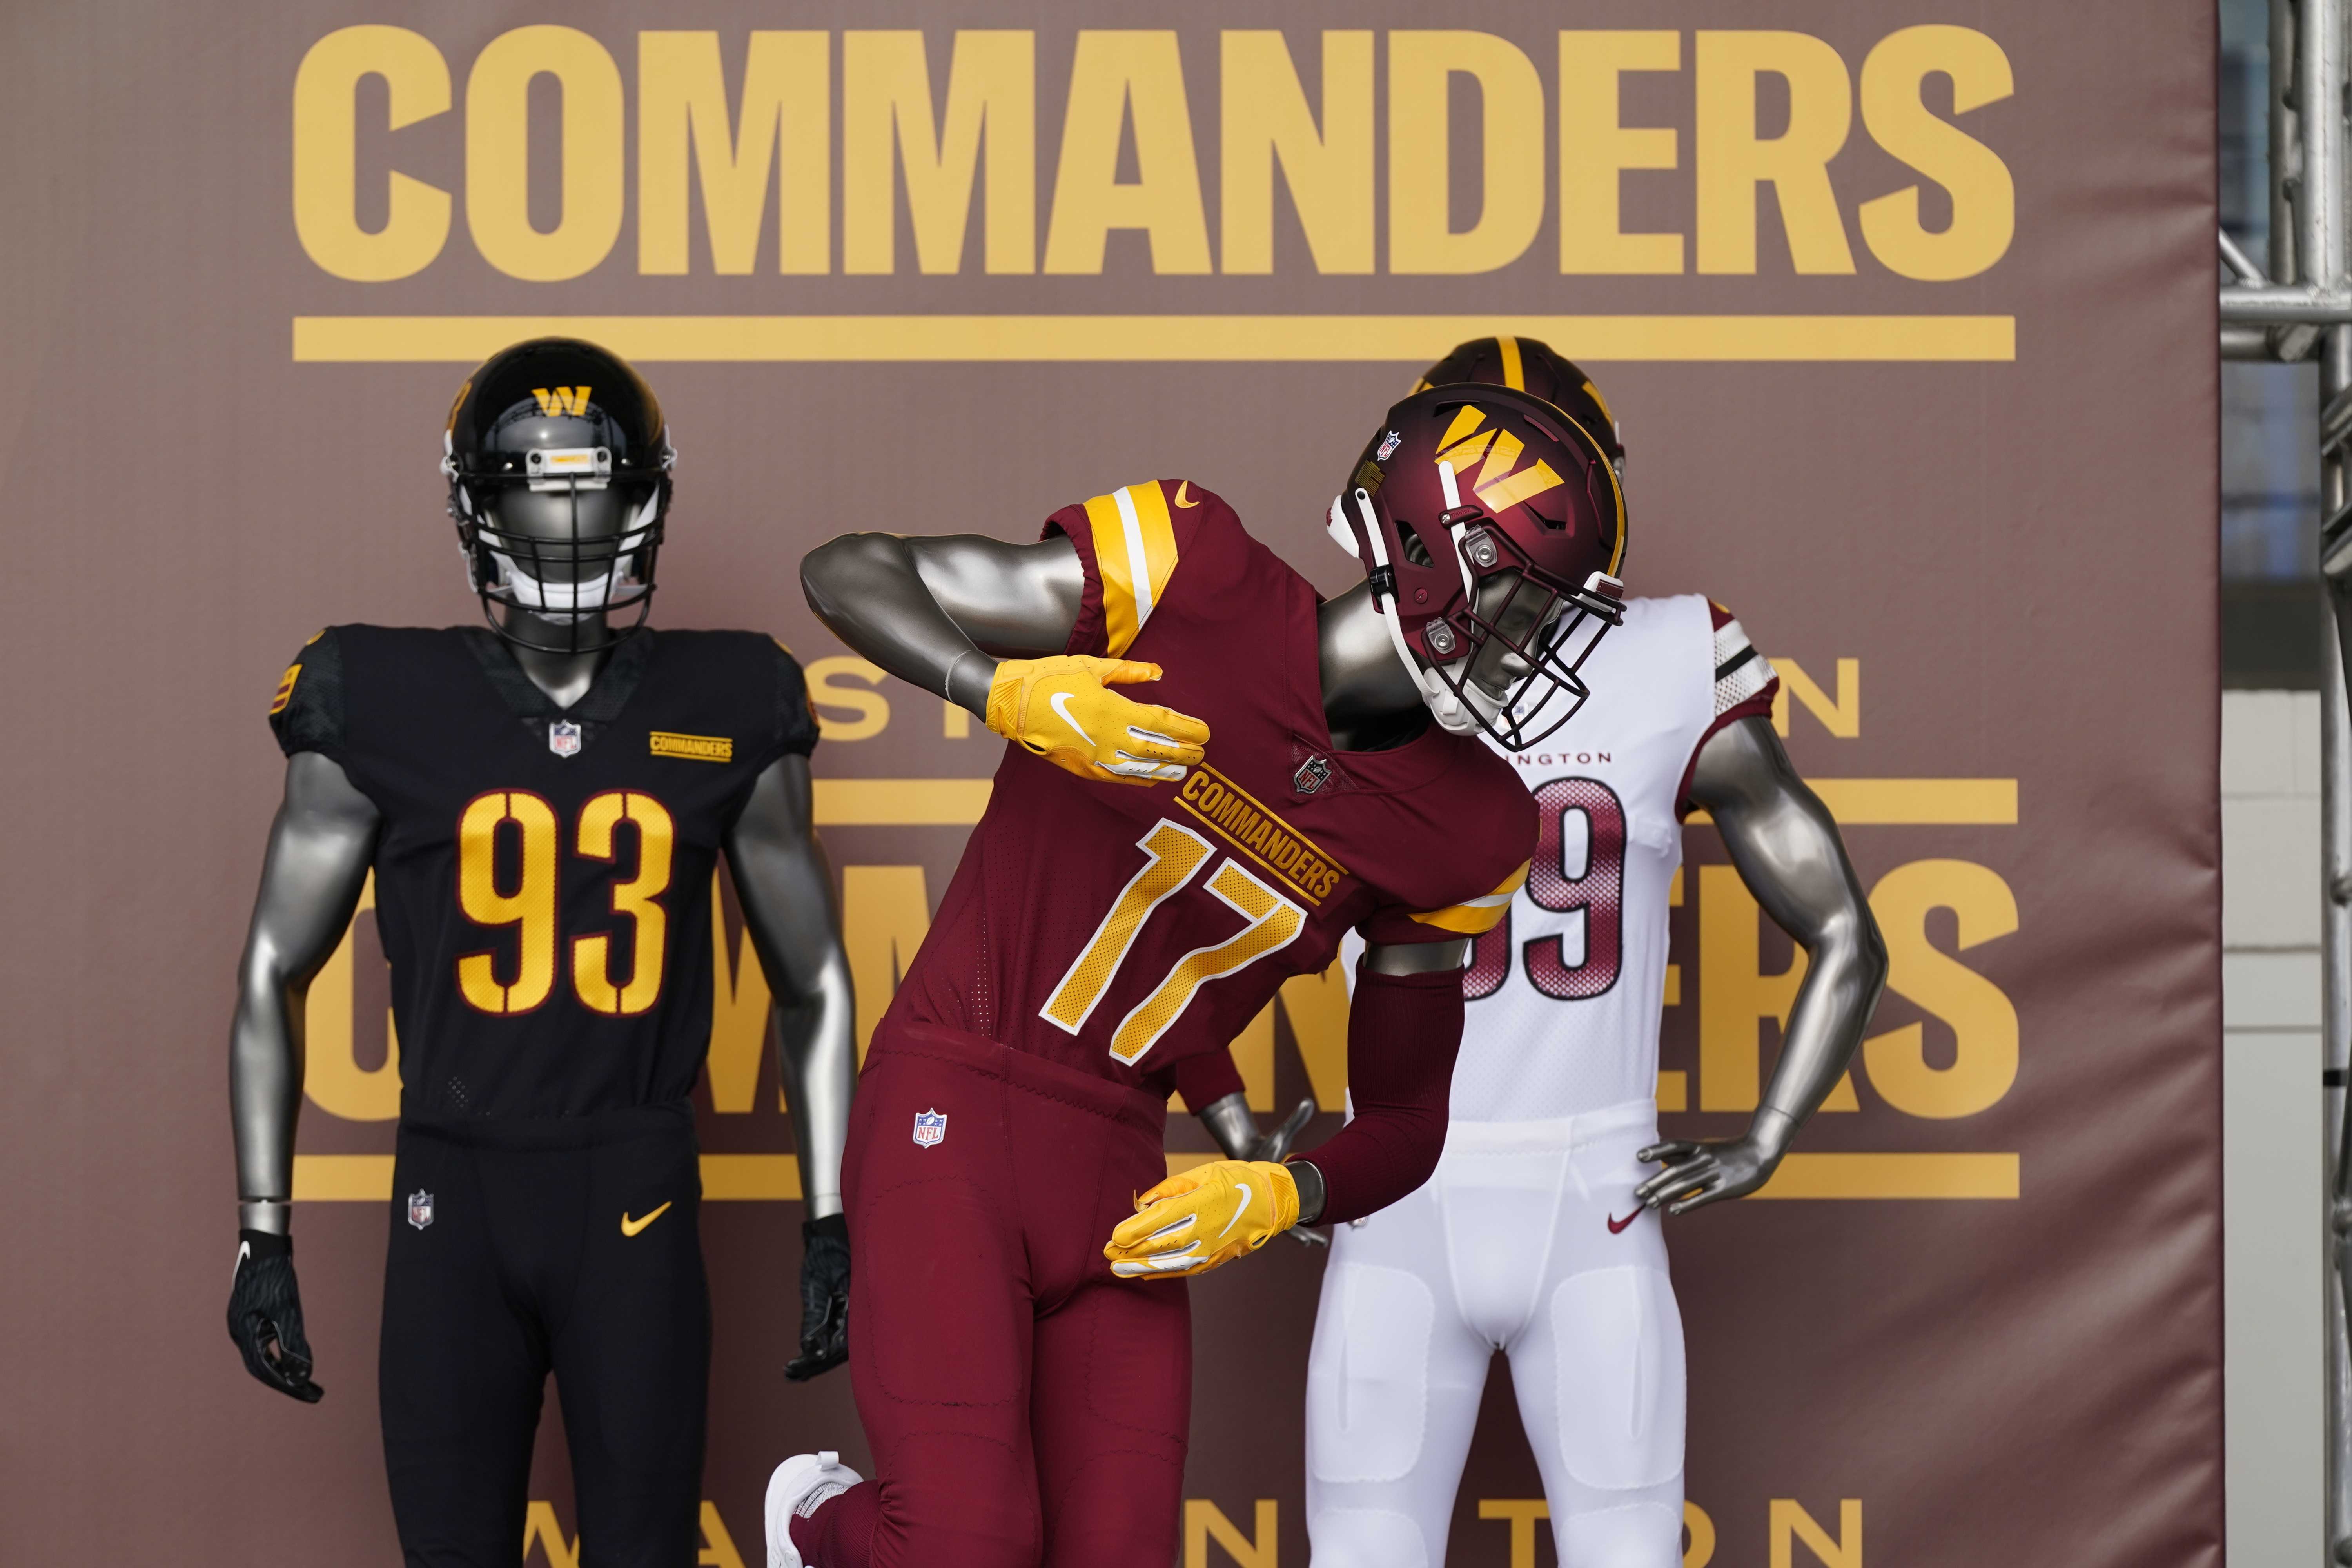 Washington's NFL team unveils new name as Commanders